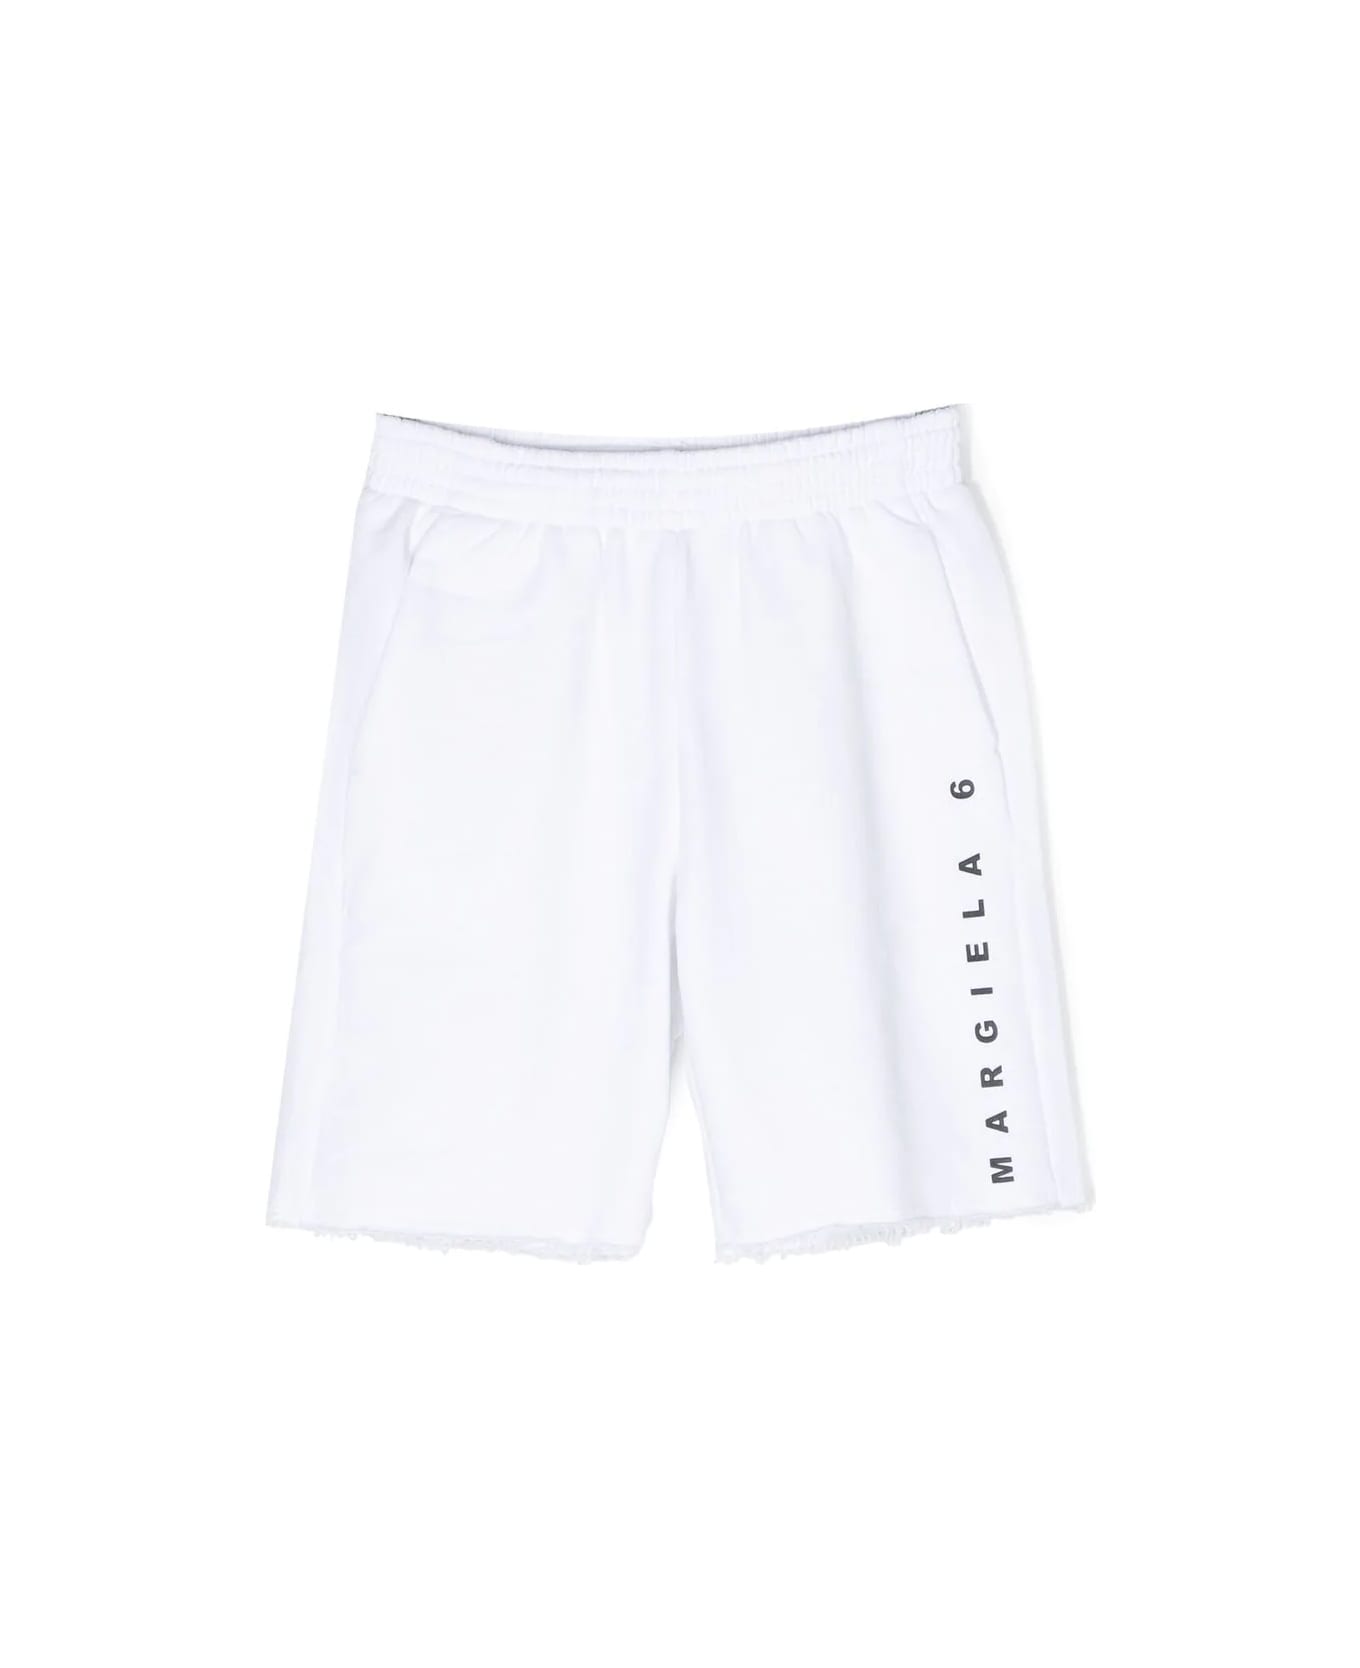 MM6 Maison Margiela Mm6p72u Short Pants - White ボトムス